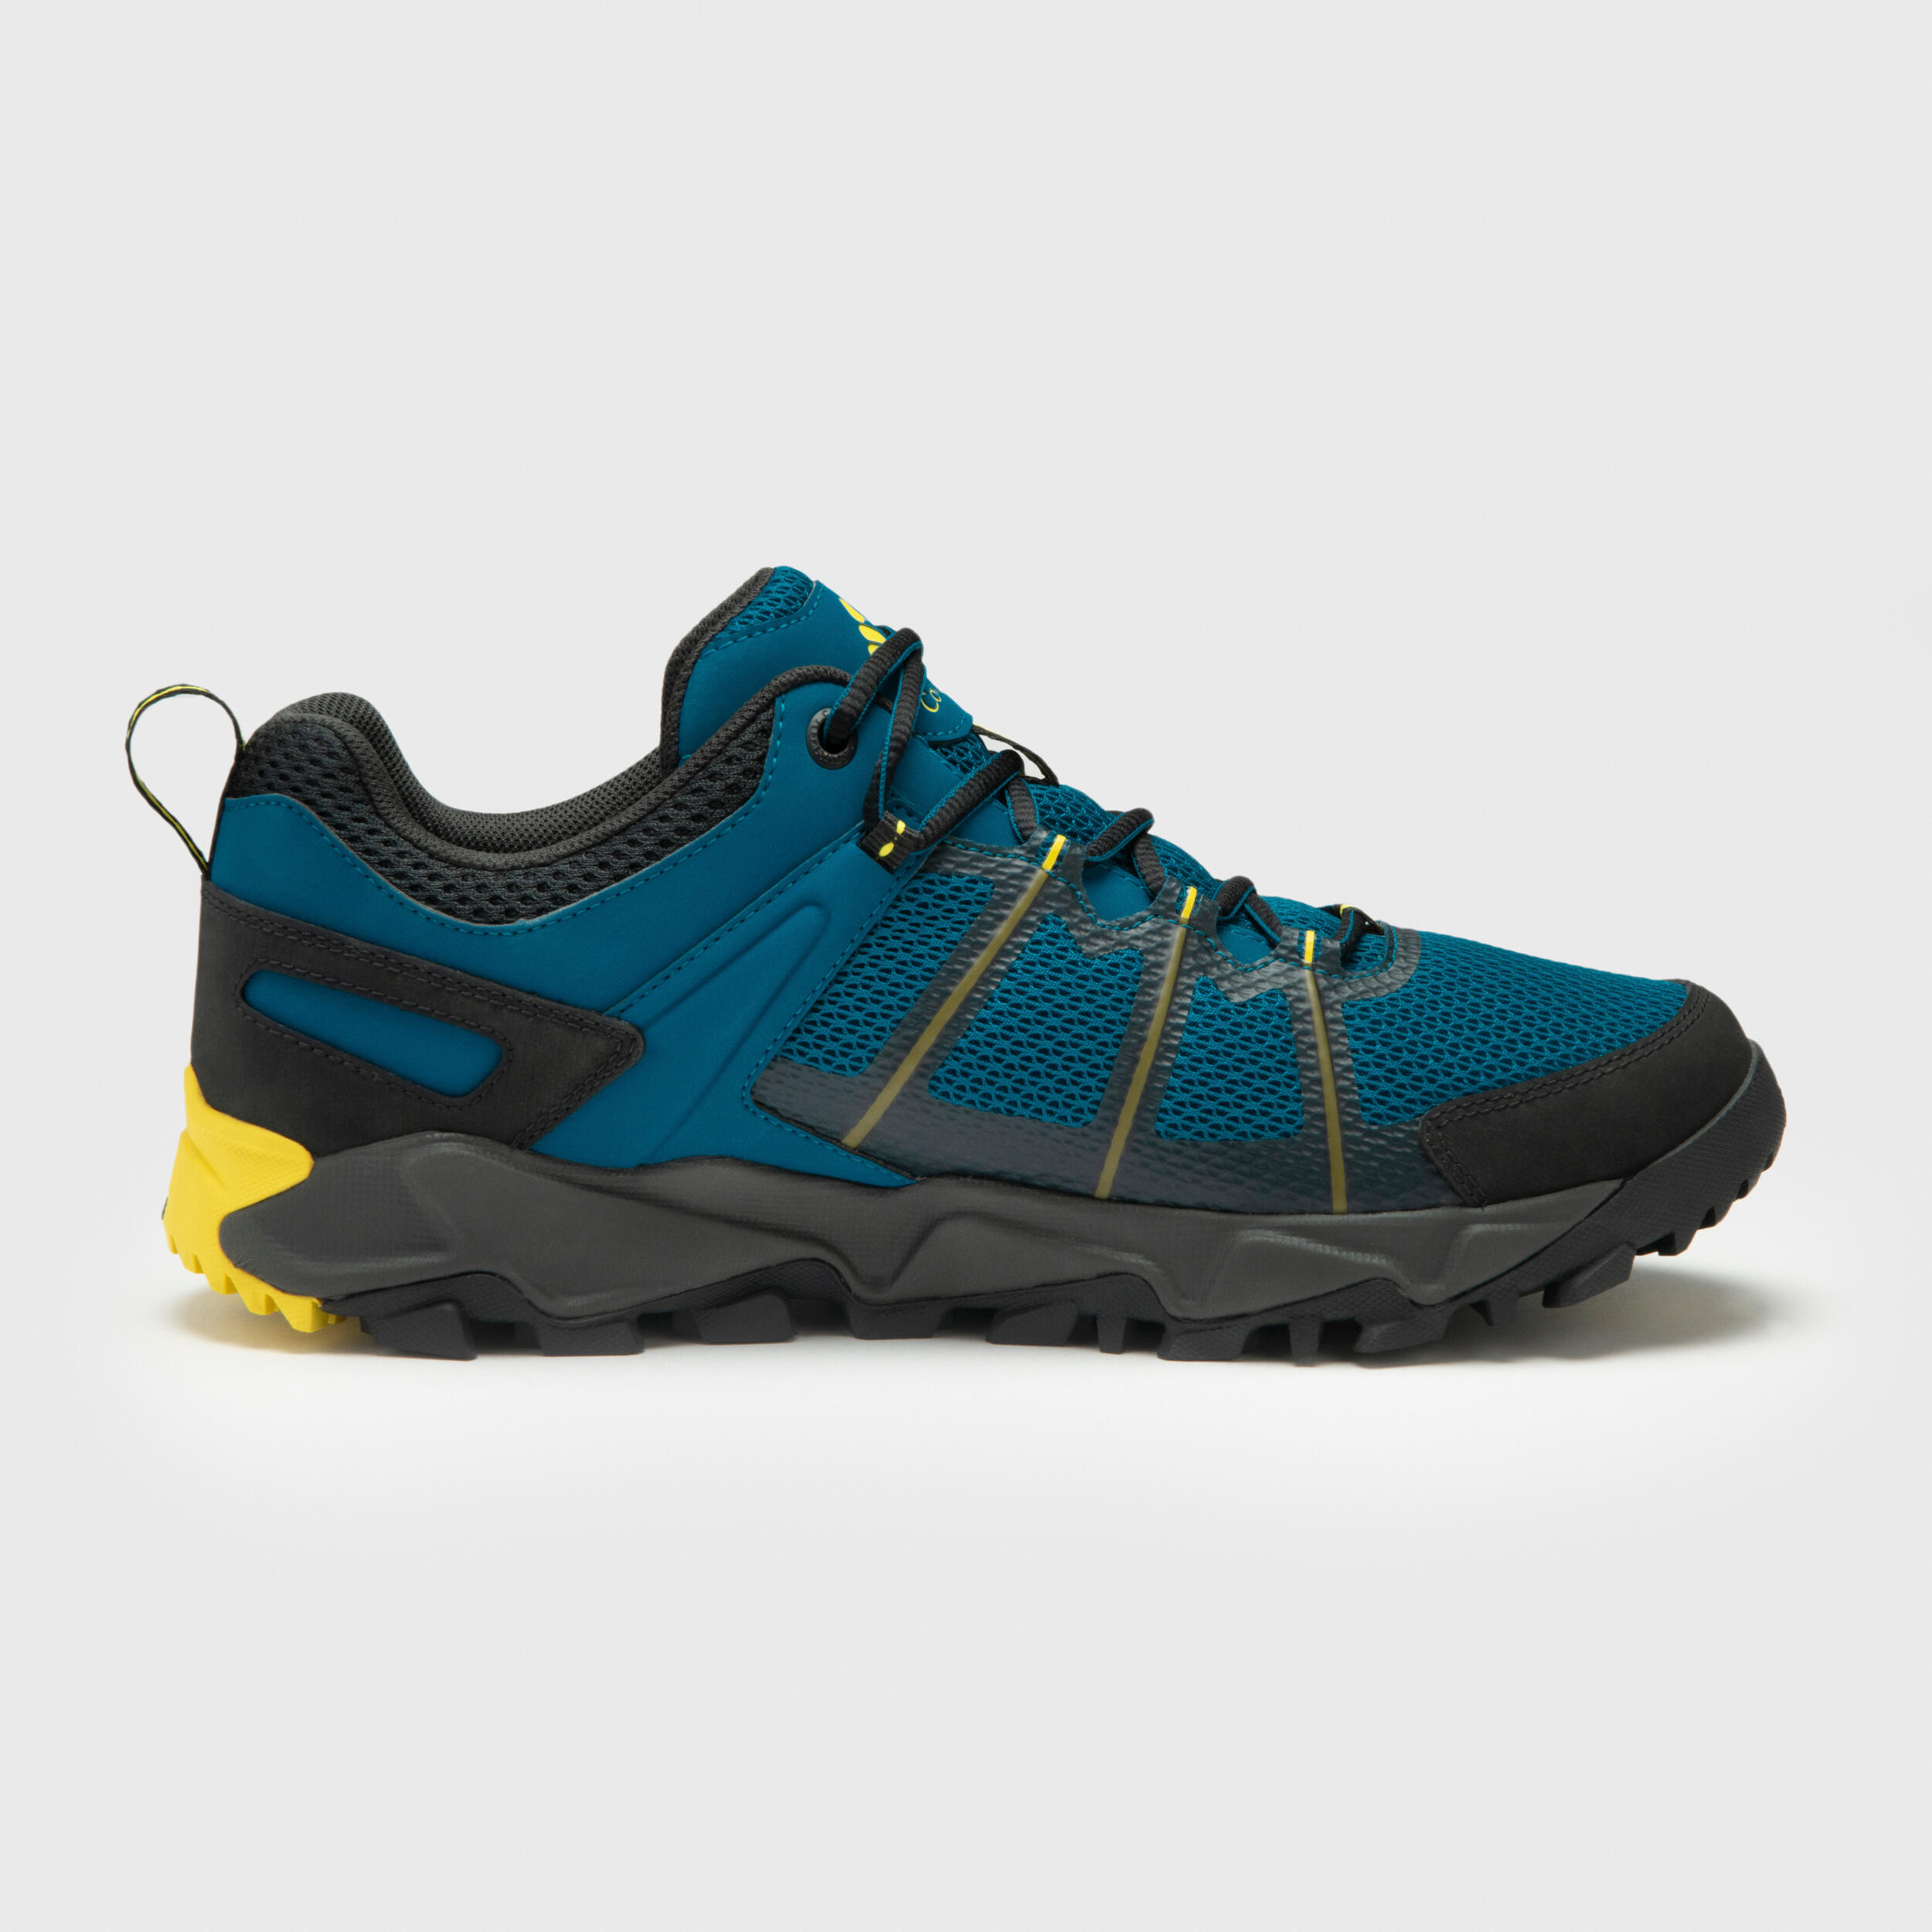 Men’s Hiking Boots Columbia Redbud Transalp 2/4